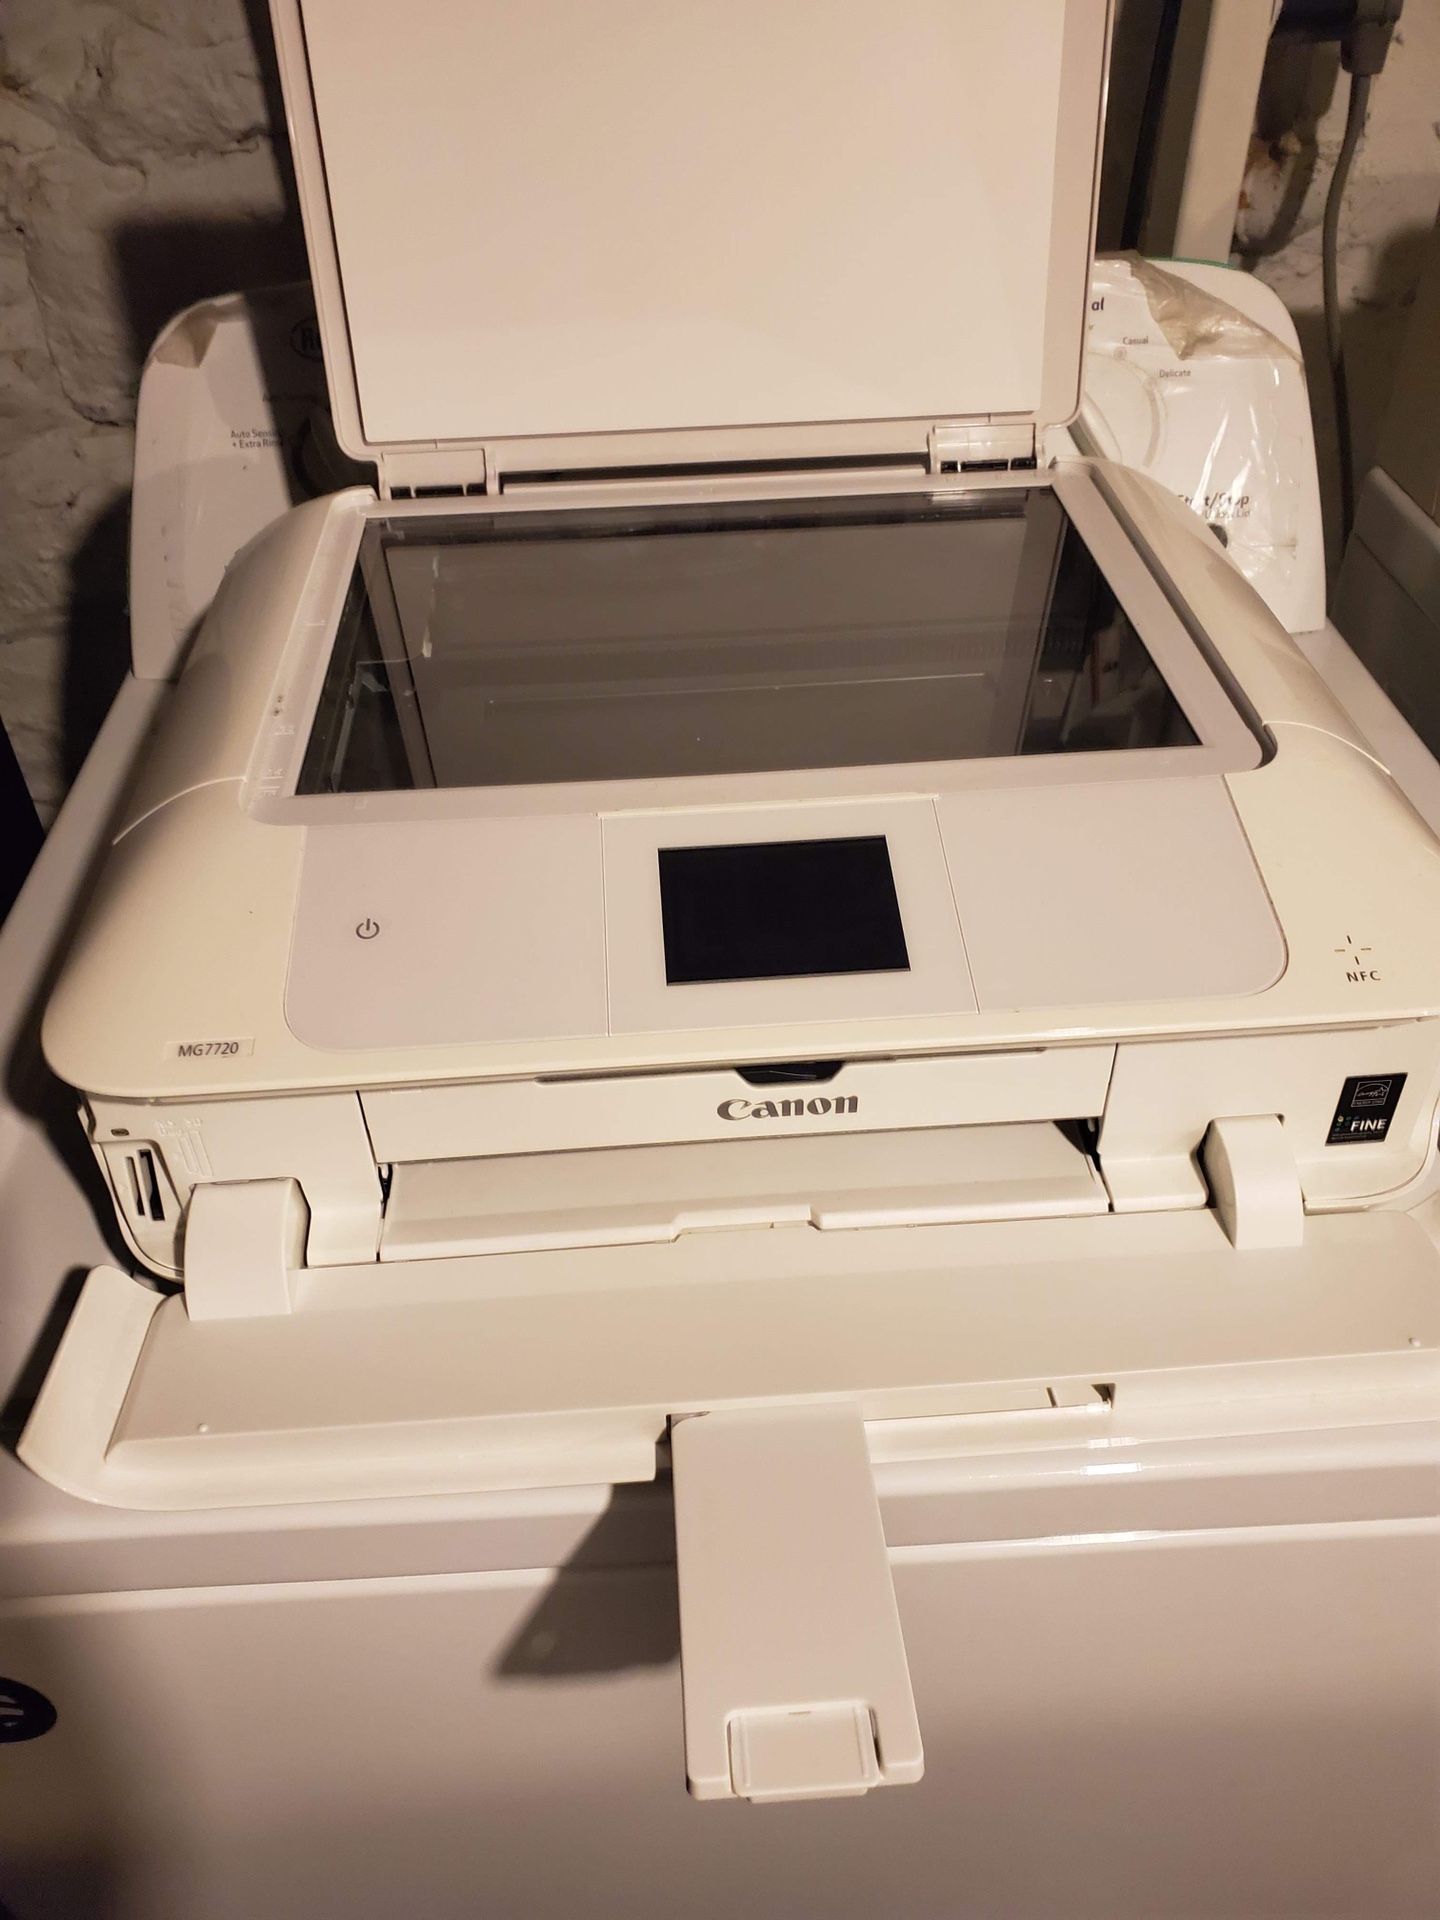 Printer/scanner